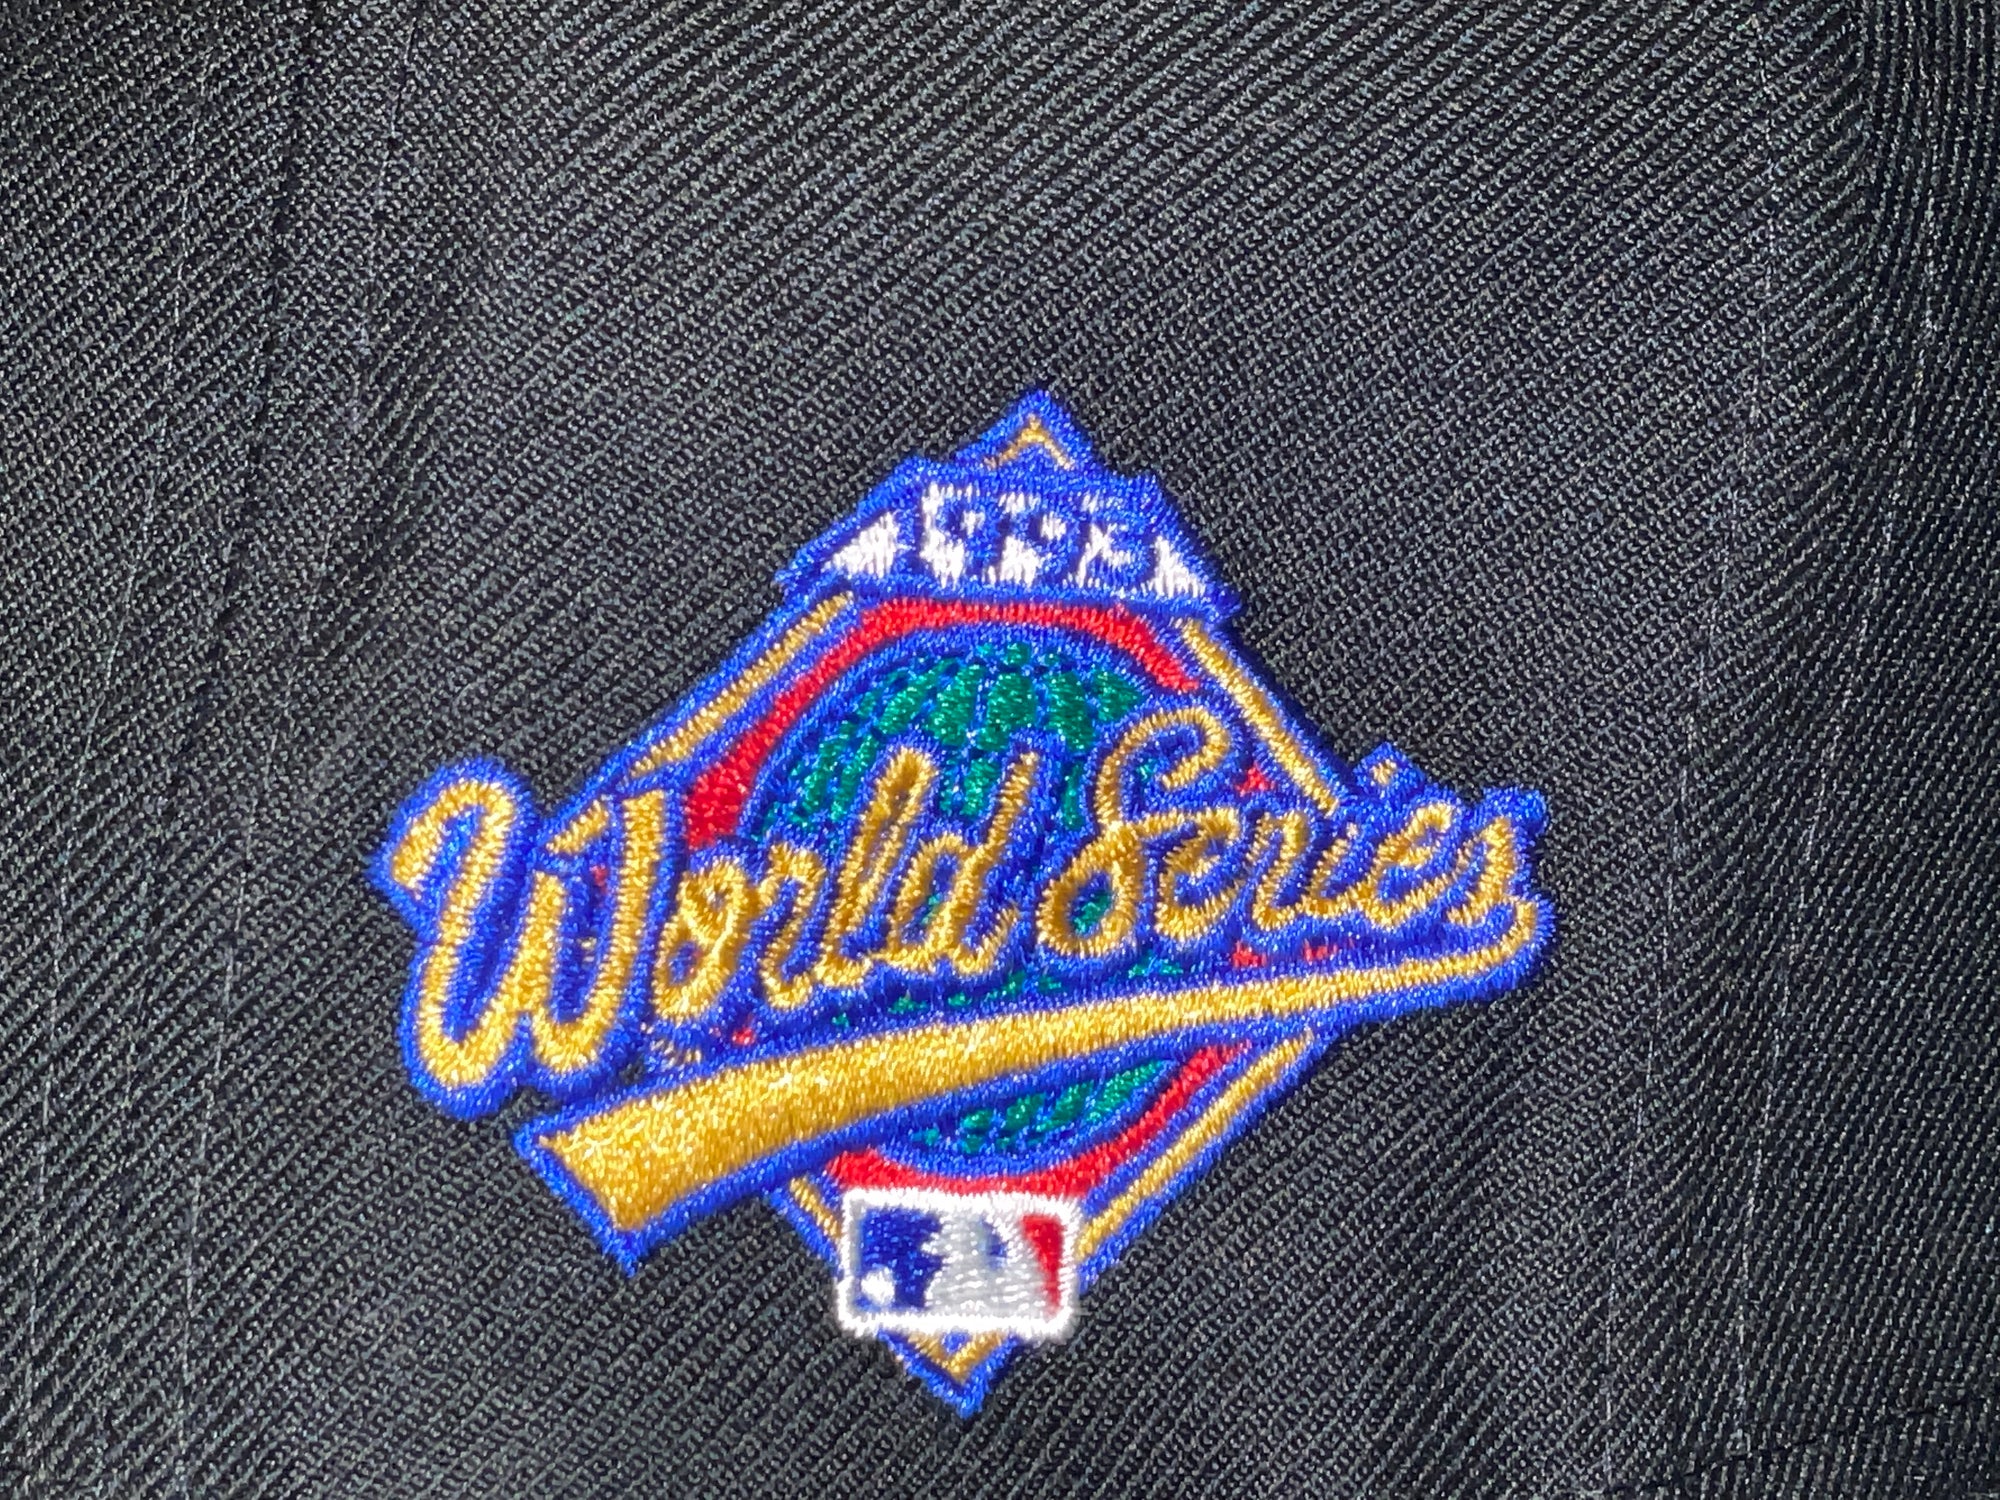 1993 World Series Patch